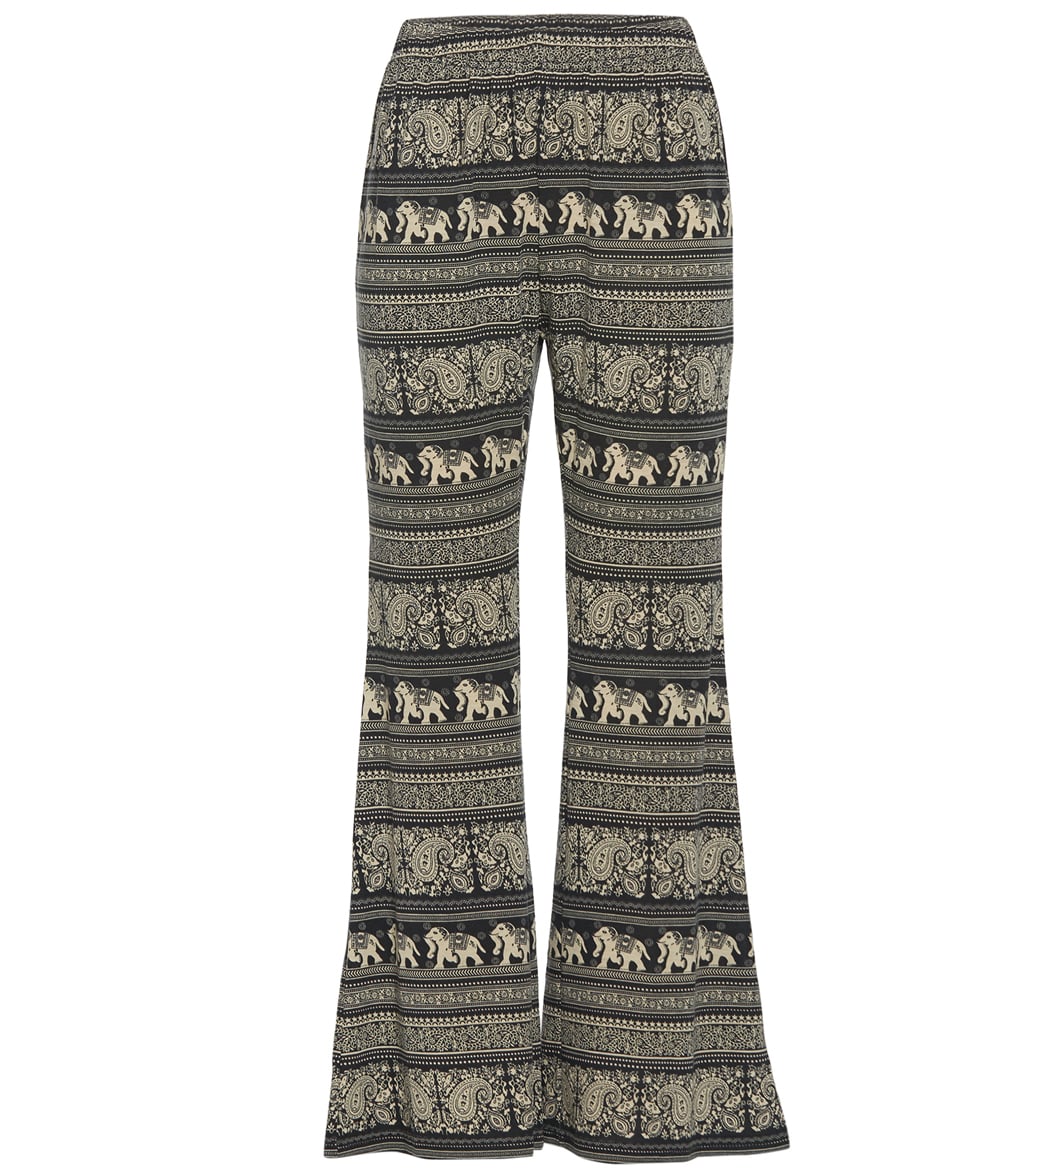 Yak & Yeti Elephant Print Yoga Pants - Black/Beige Medium Size Medium - Swimoutlet.com